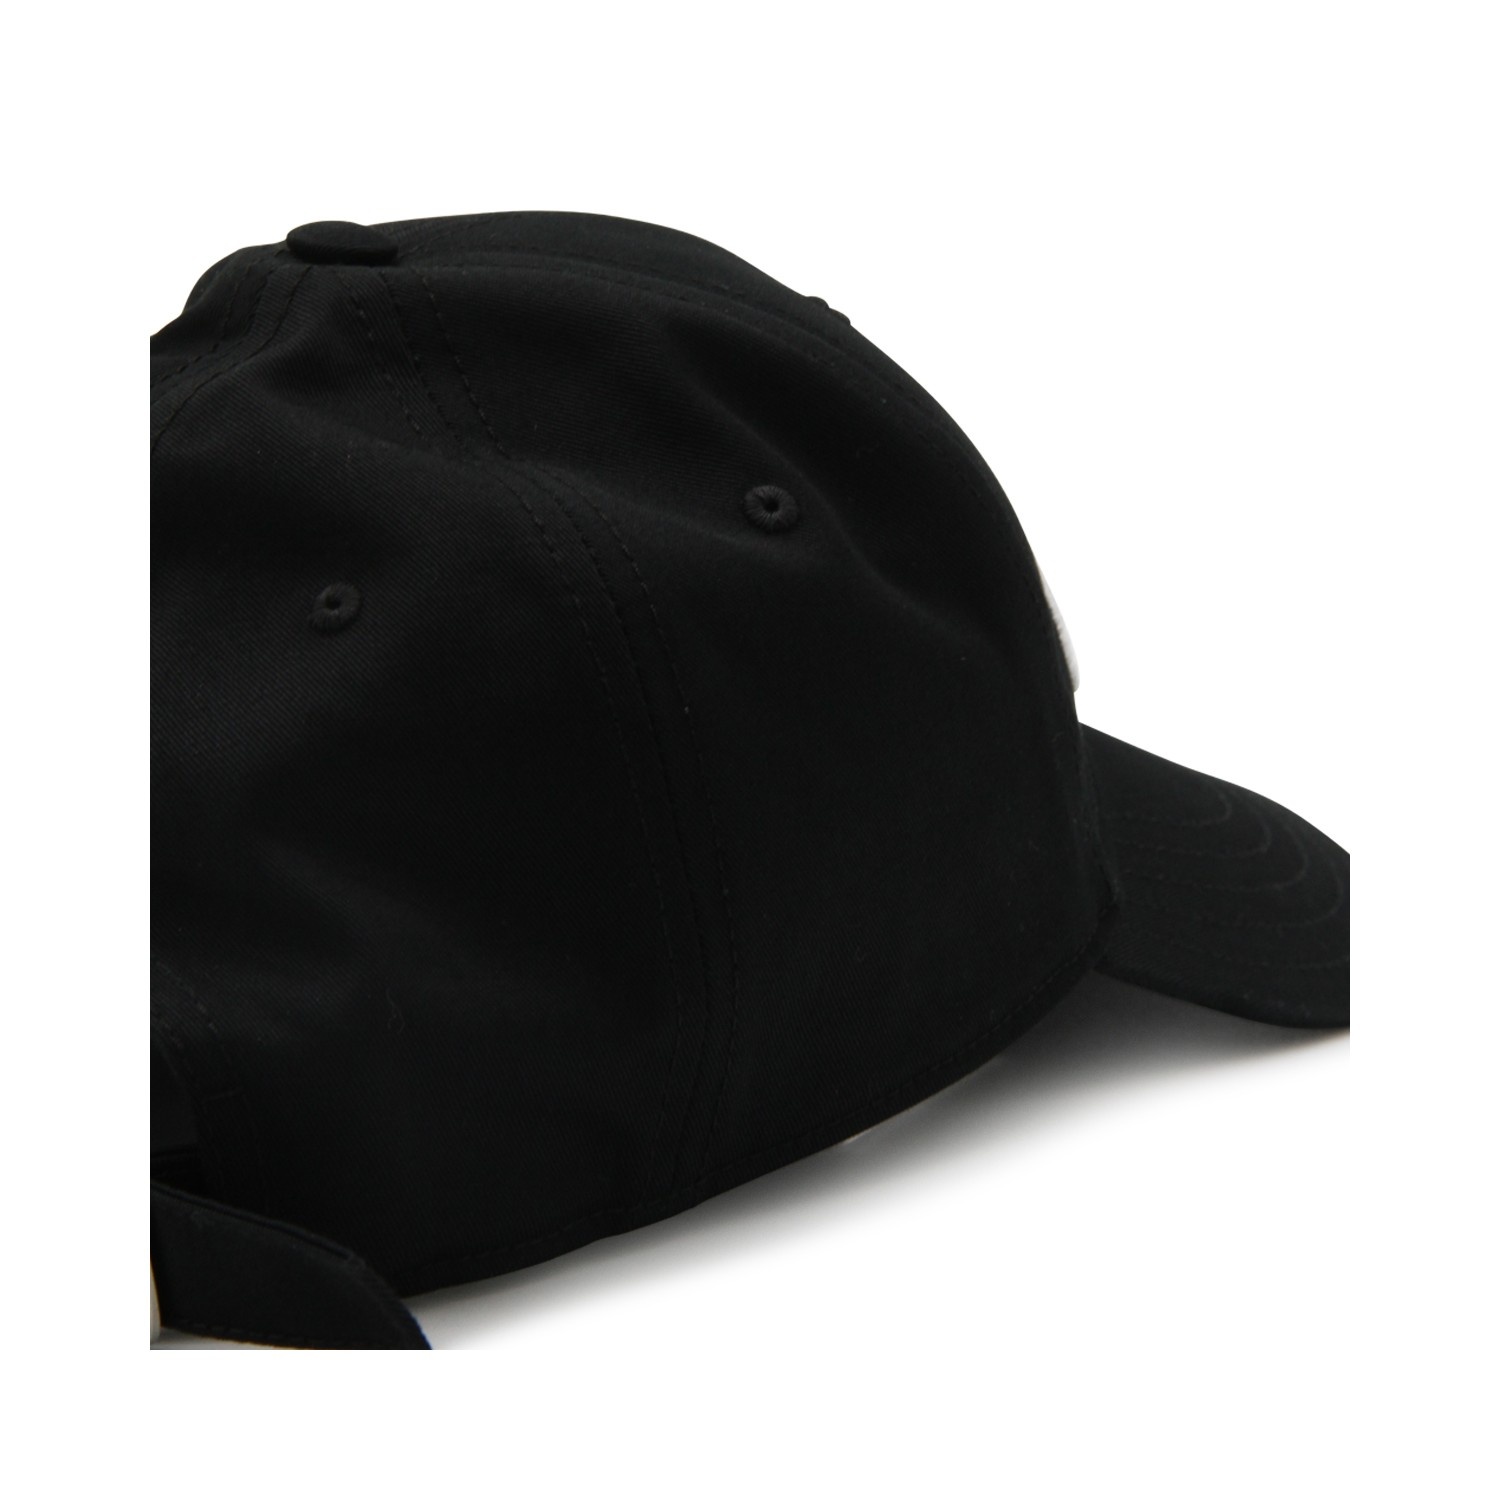 BLACK AND WHITE COTTON LOGO BASEBALL CAP - 2